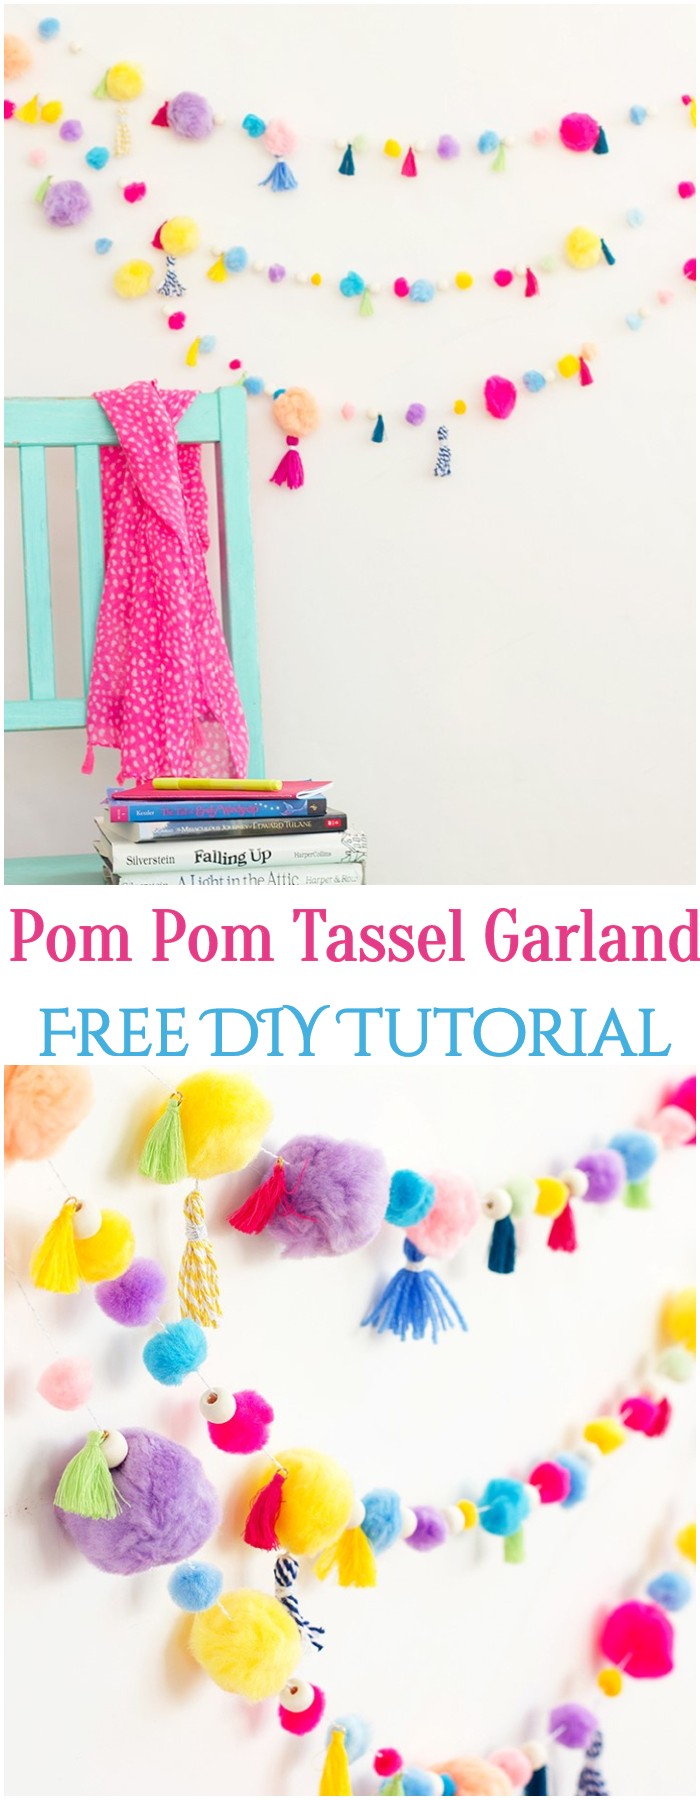 DIY Pom Pom Tassel Garland